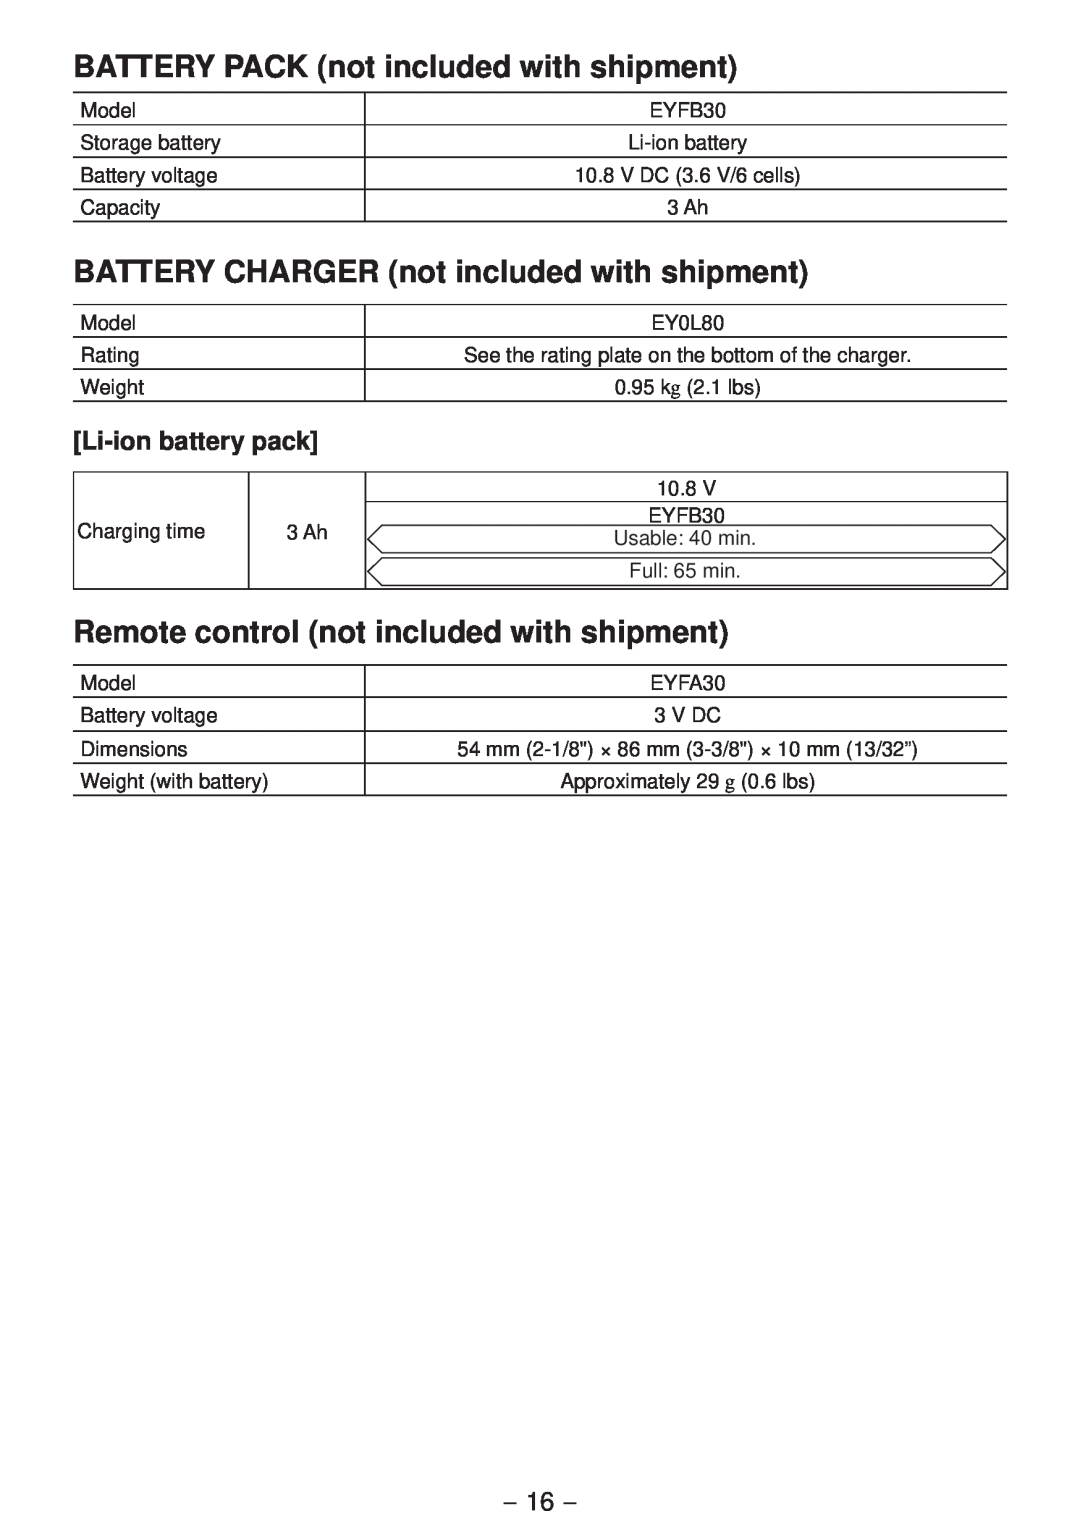 Panasonic EYFLA2Q BATTERY PACK not included with shipment, BATTERY CHARGER not included with shipment, Li-ion battery pack 